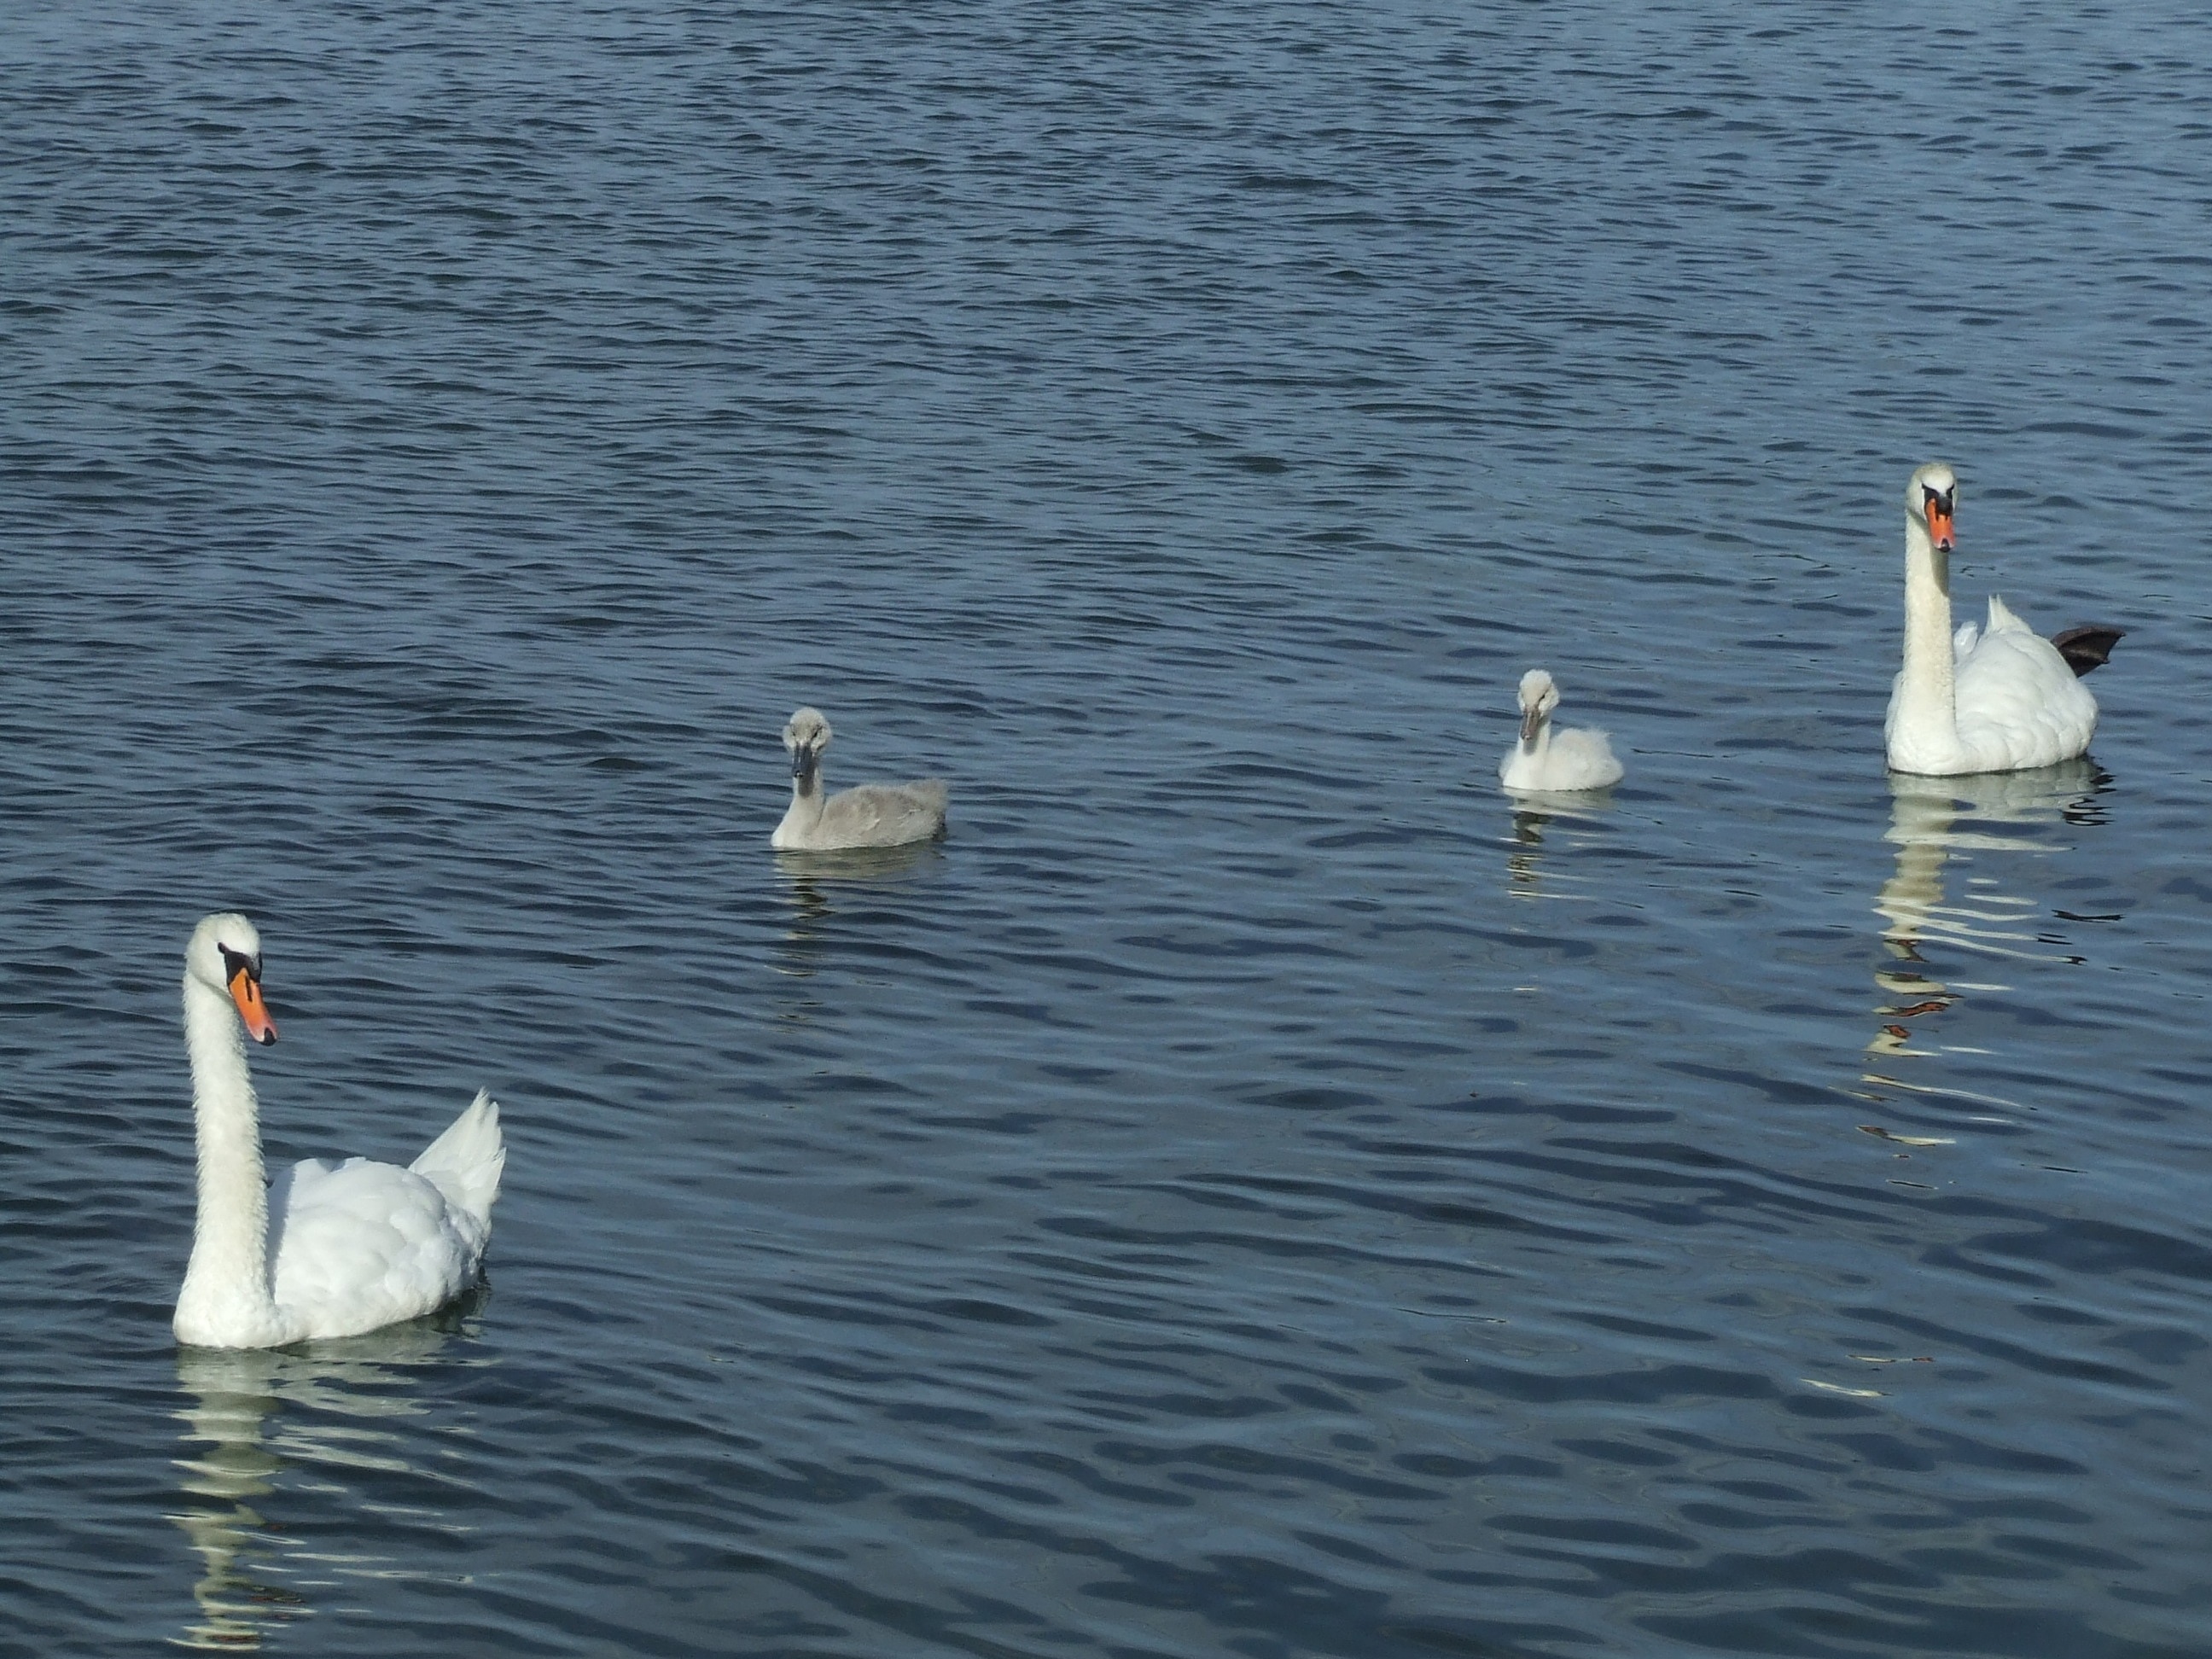 4 white swans